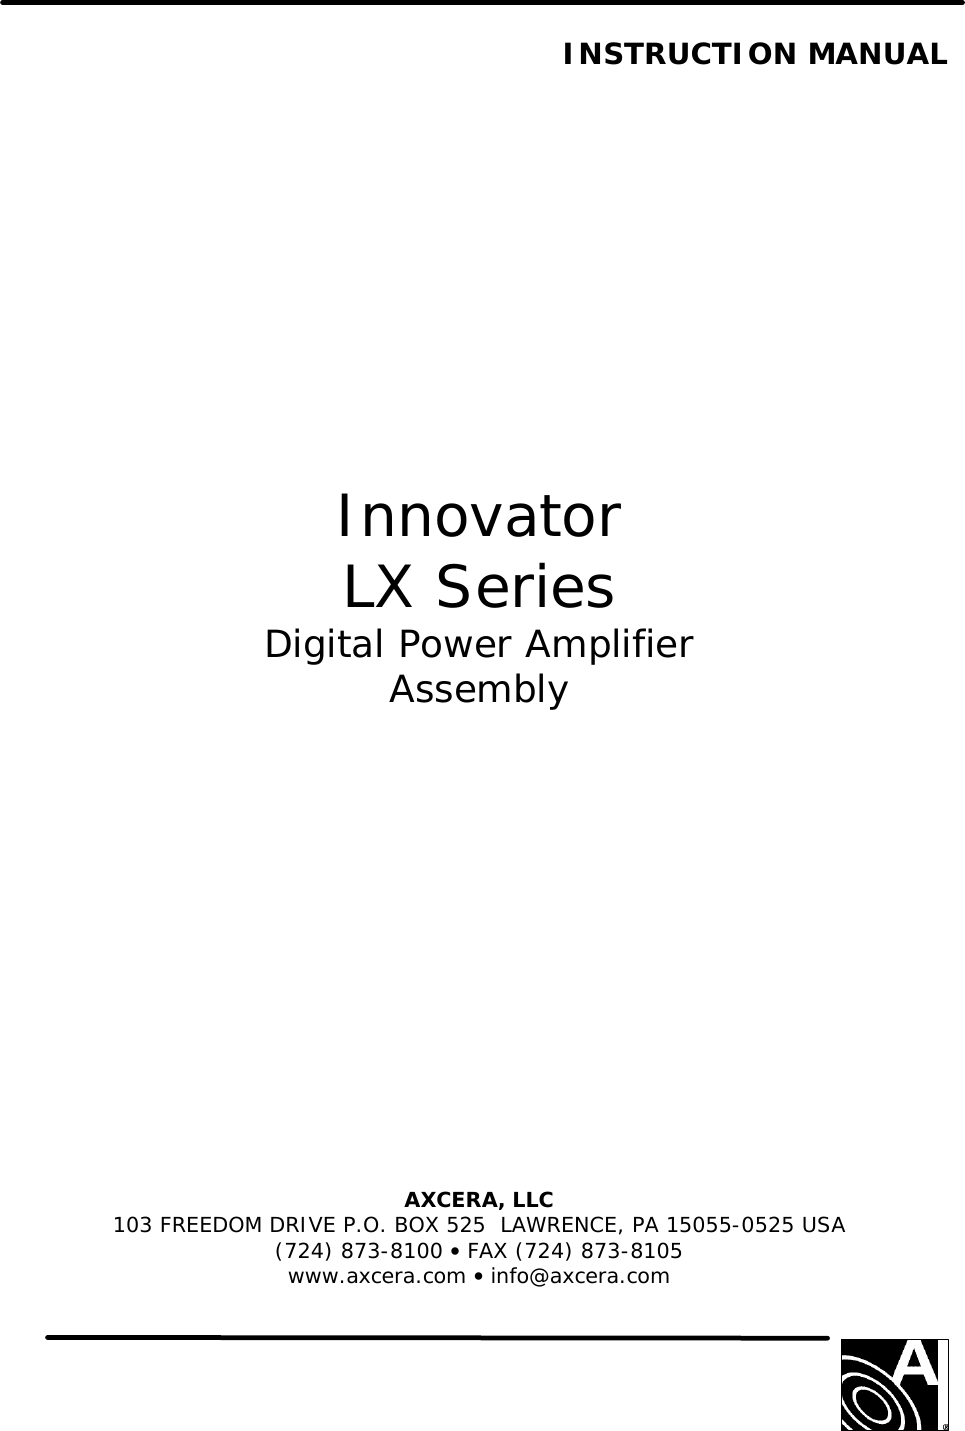   INSTRUCTION MANUAL                  Innovator LX Series Digital Power Amplifier Assembly               AXCERA, LLC  103 FREEDOM DRIVE P.O. BOX 525  LAWRENCE, PA 15055-0525 USA (724) 873-8100 • FAX (724) 873-8105 www.axcera.com • info@axcera.com     